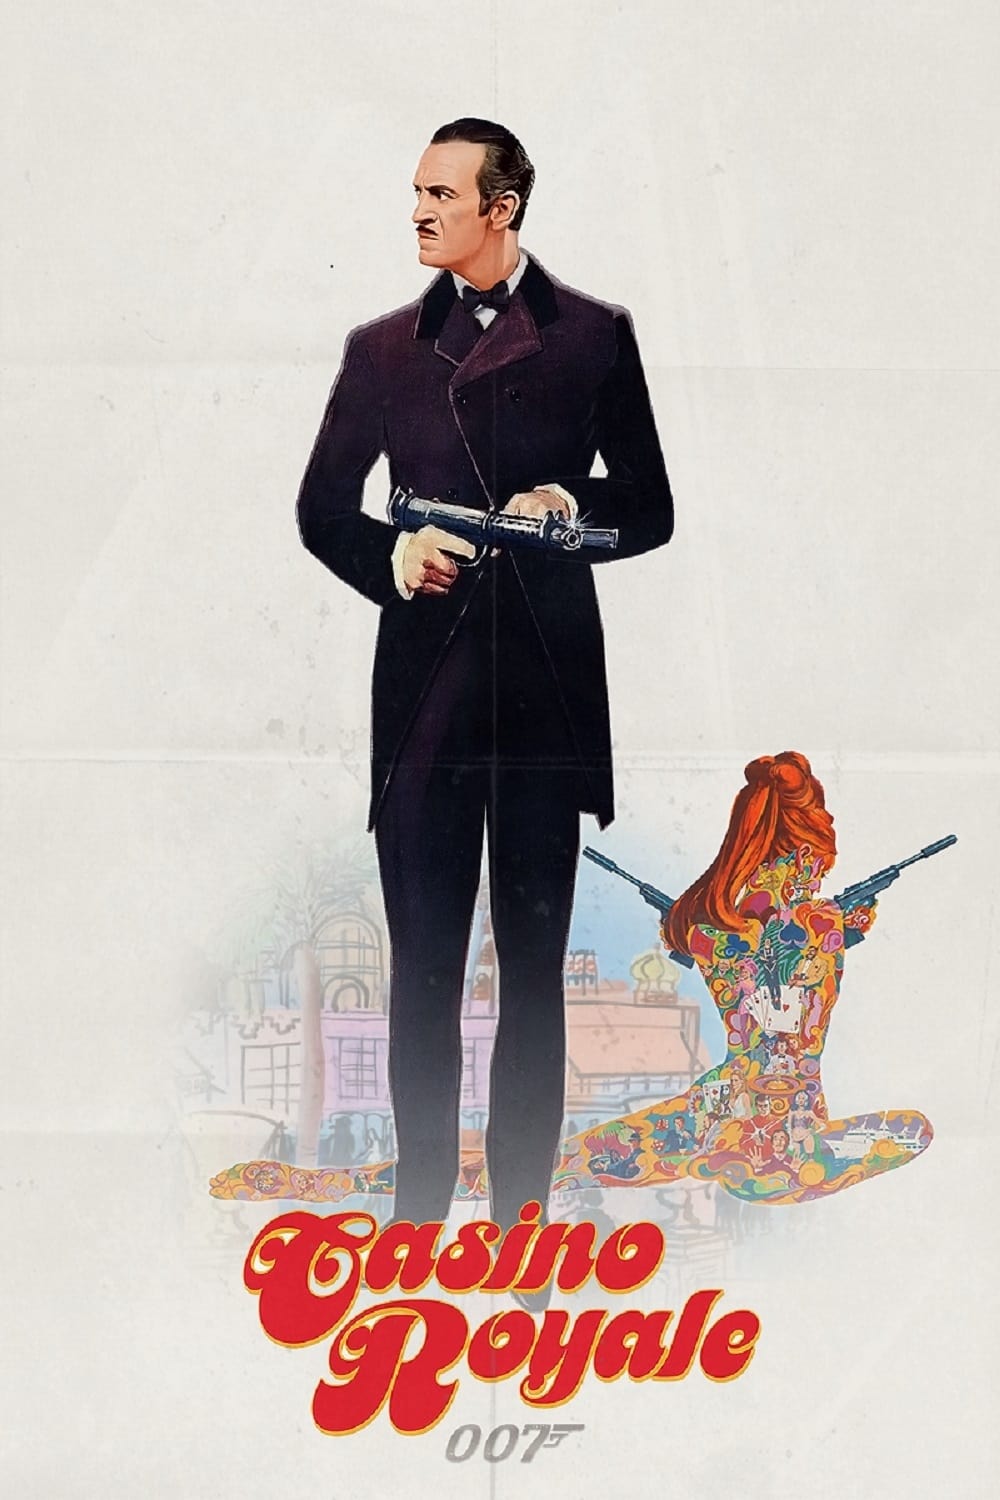 Cassino Royale (1967)